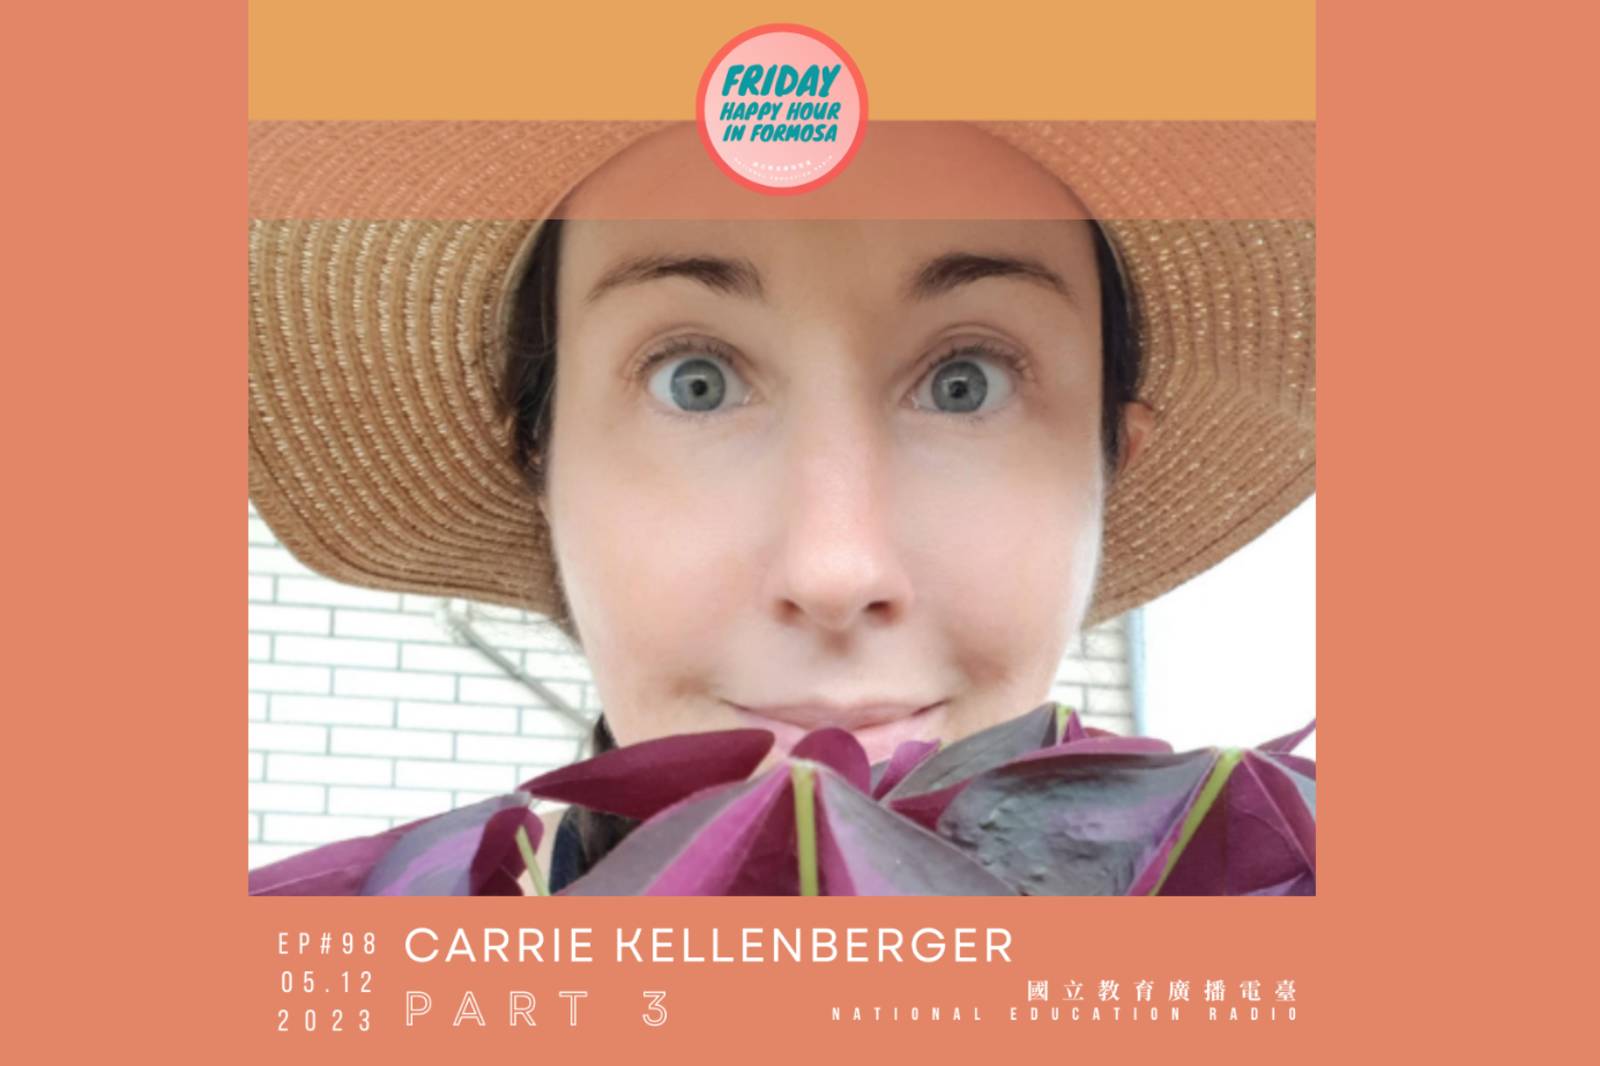 My Several Worlds 的慢性疾病及殘疾倡導者 Carrie Kellenberger - Part 3 * Disability Advocate Carrie Kellenberger of My Several Worlds - Part 13